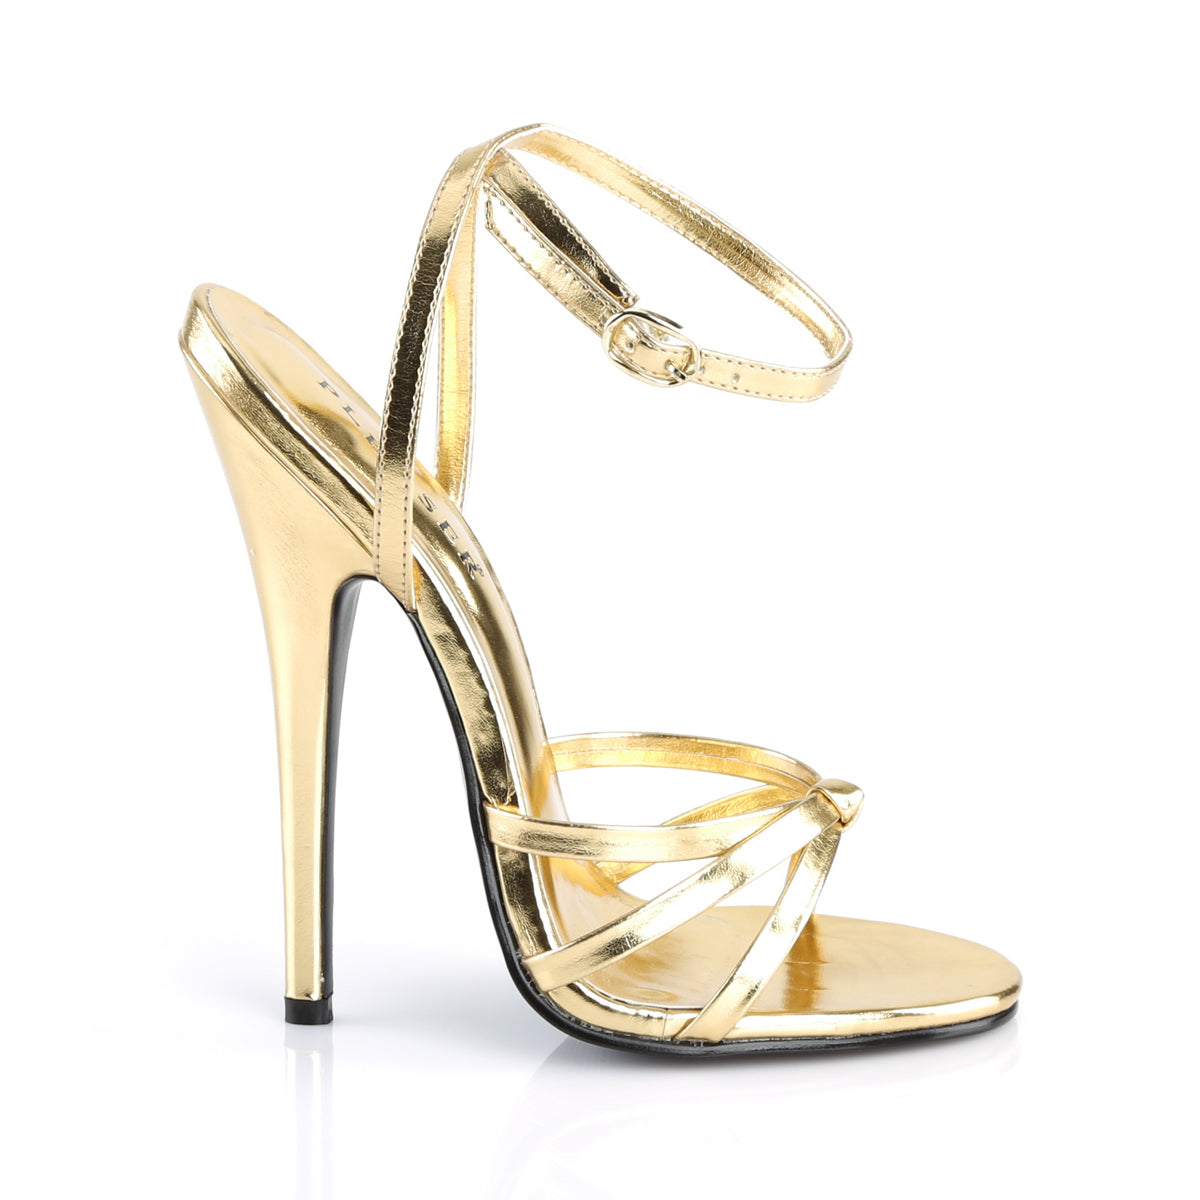 Devious Womens Sandals DOMINA-108 Gold Metallic Pu